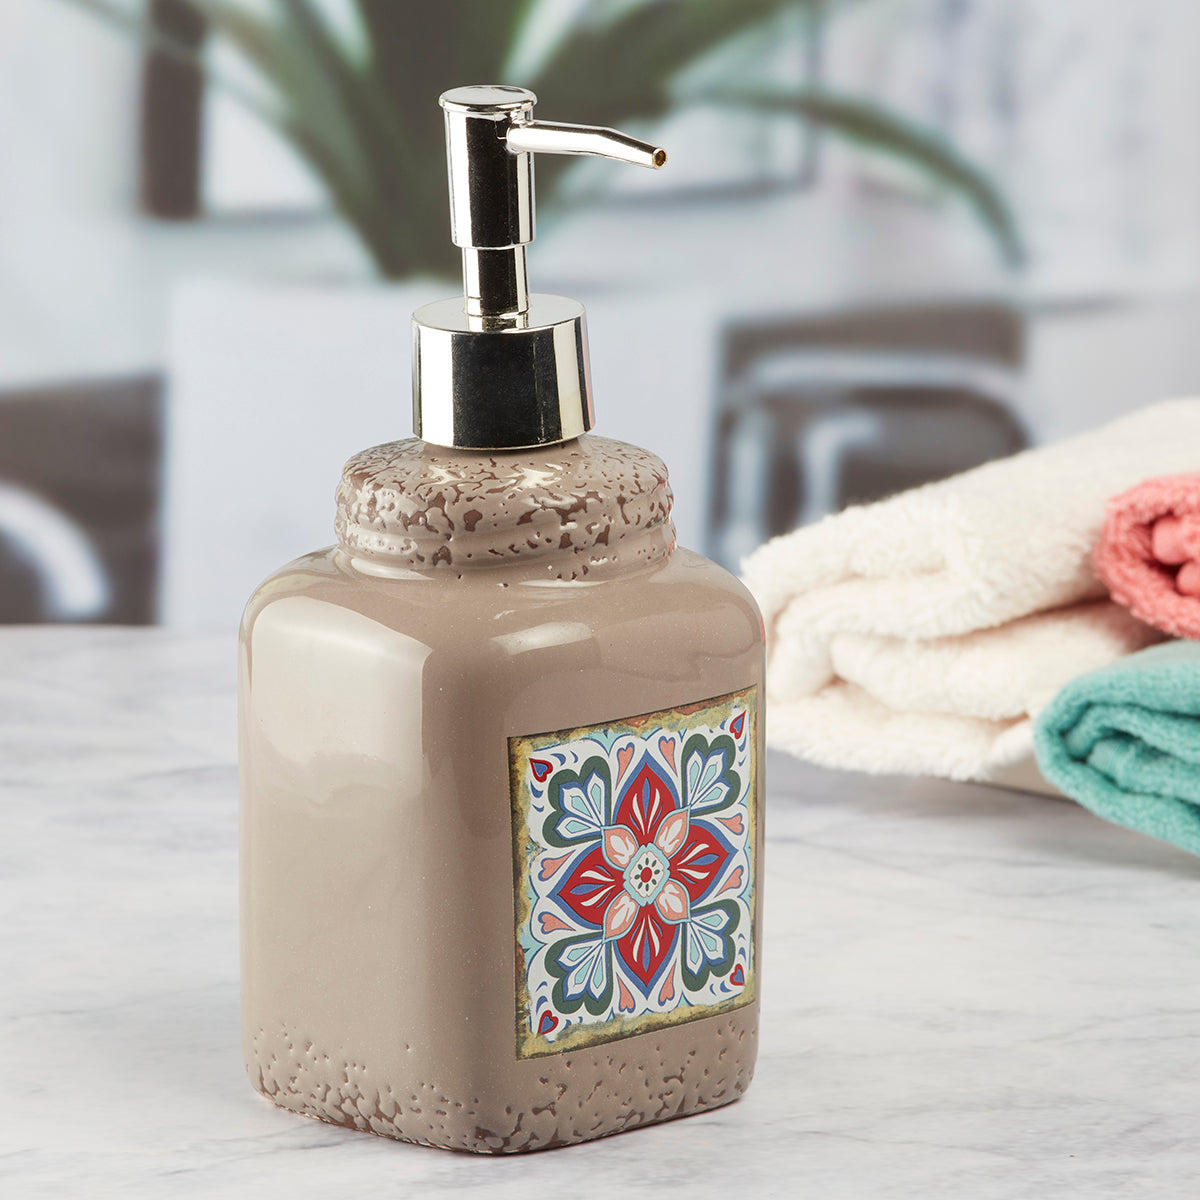 Ceramic Soap Dispenser handwash Pump for Bathroom, Set of 1, White (6292)